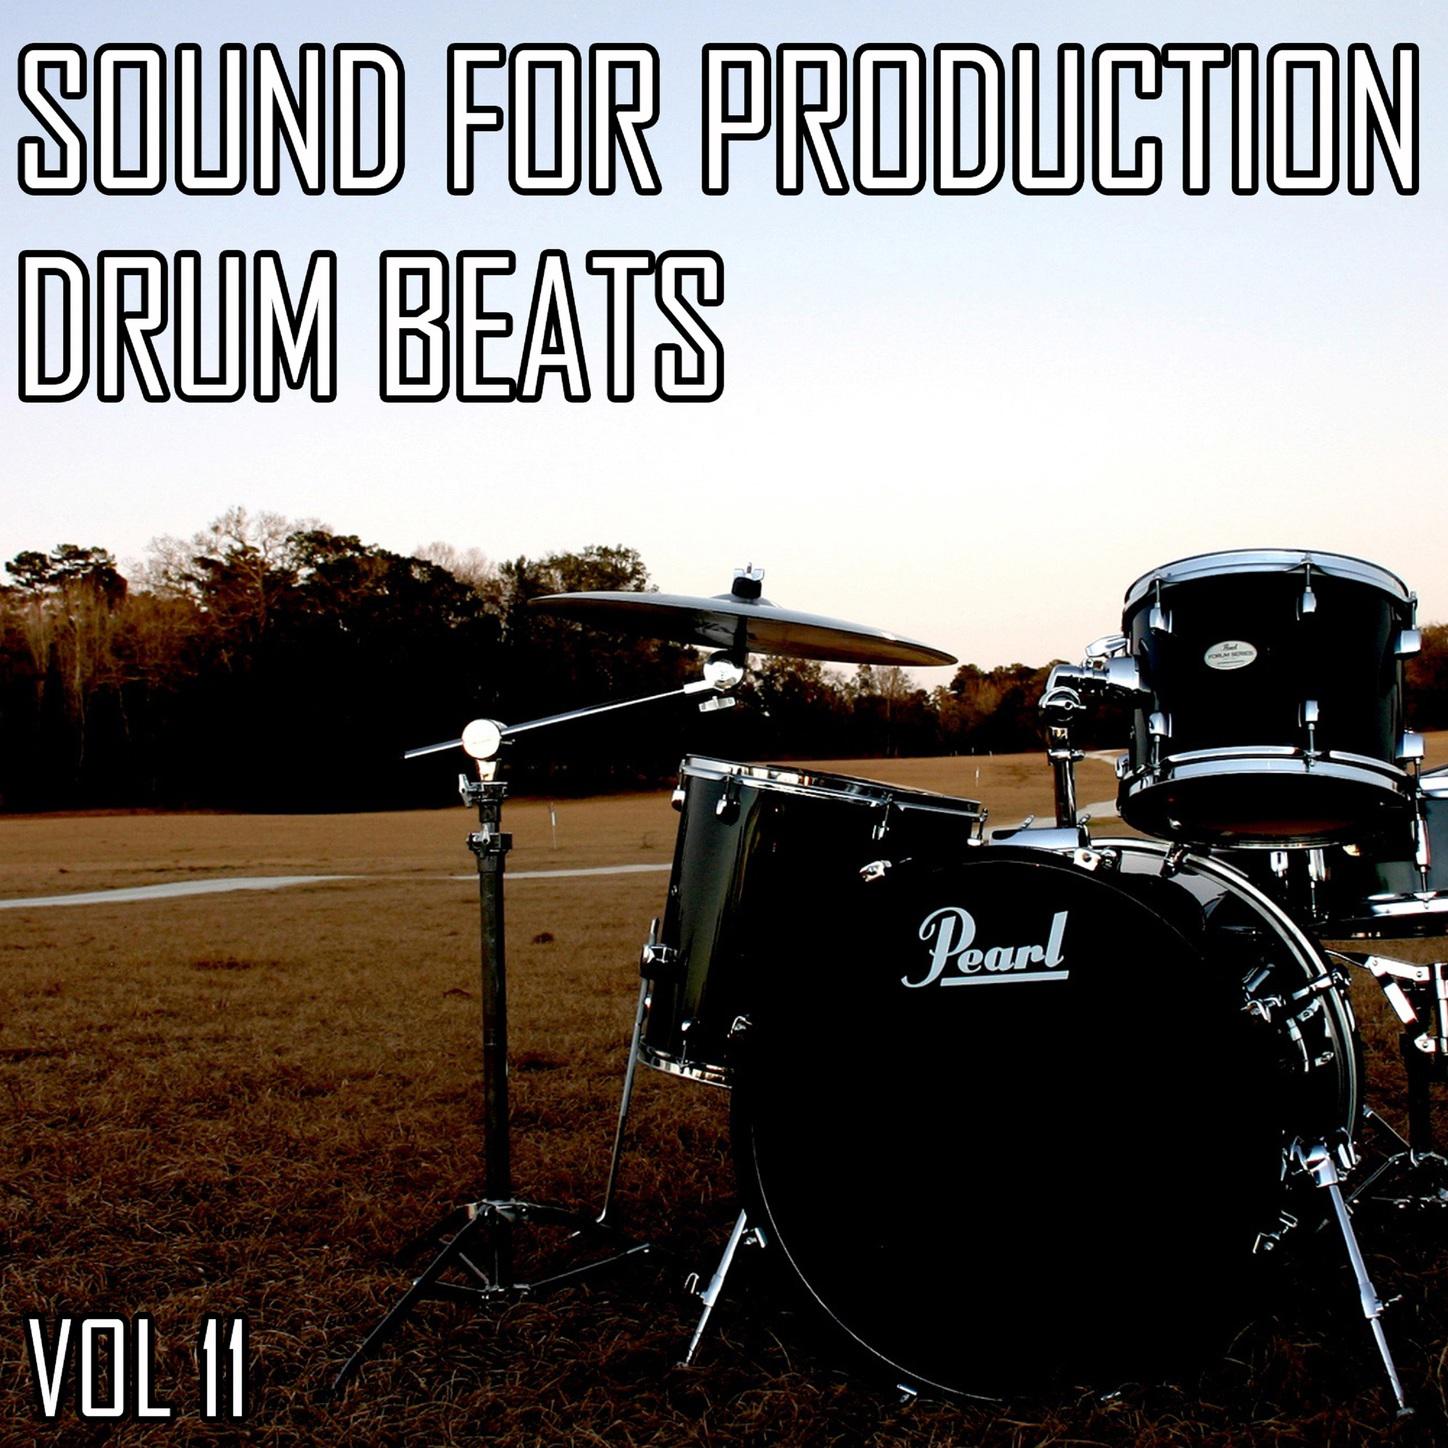 Sound For Production Drum Beats, Vol. 11